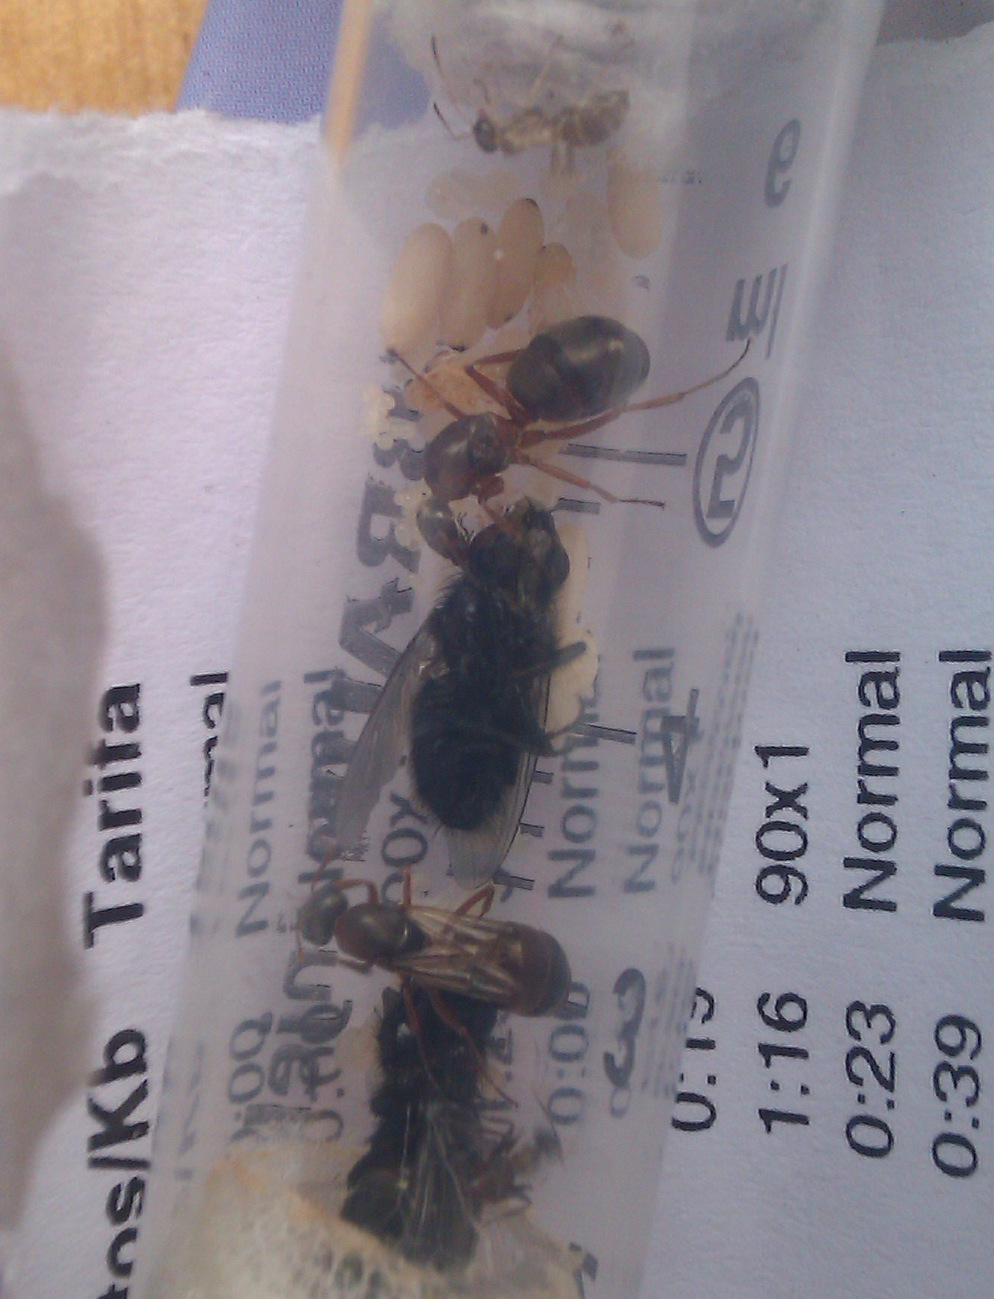 mis formica comiendo asticot